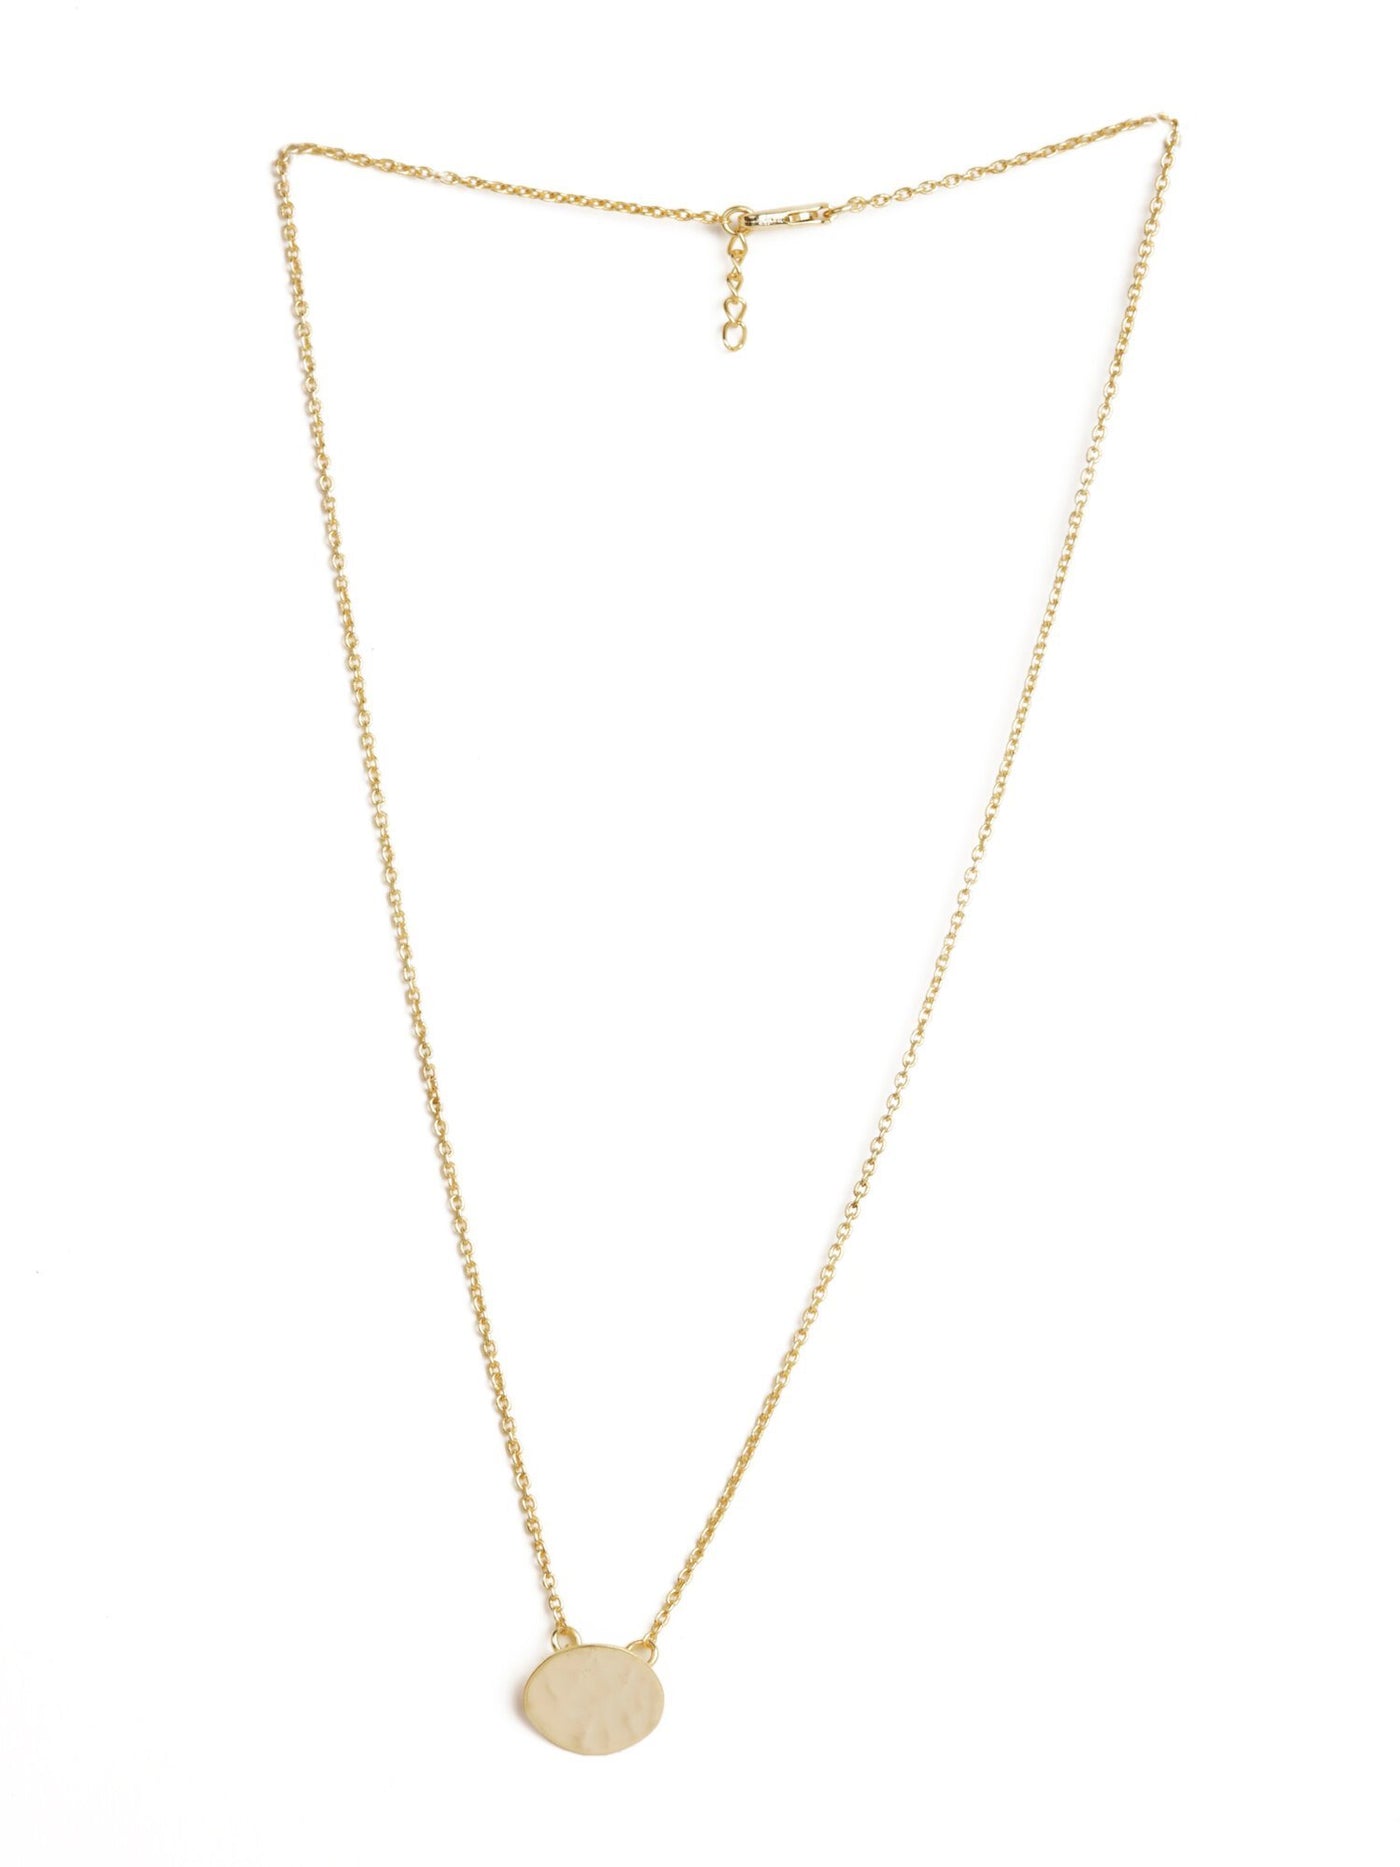 Charming Pendant Gold Necklace - Stilskii